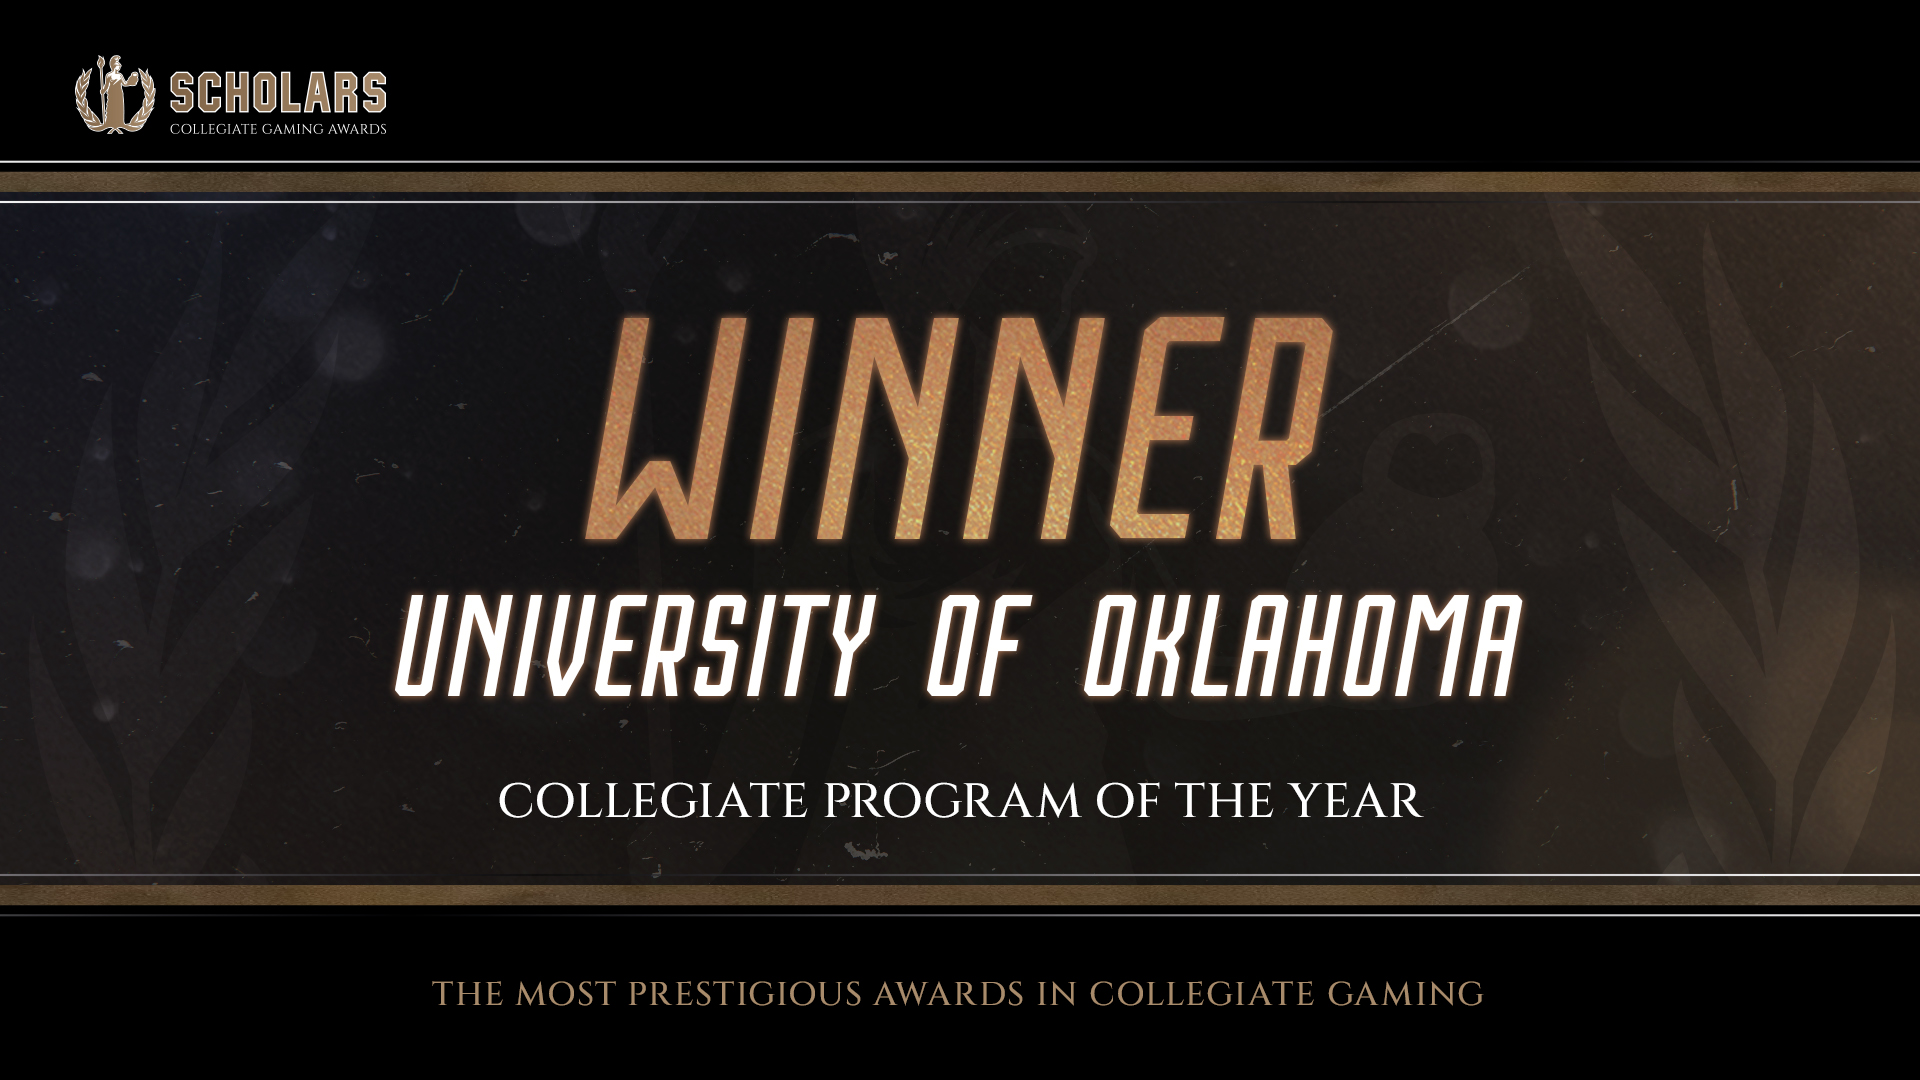 Collegiate Program of the Year: The University of Oklahoma